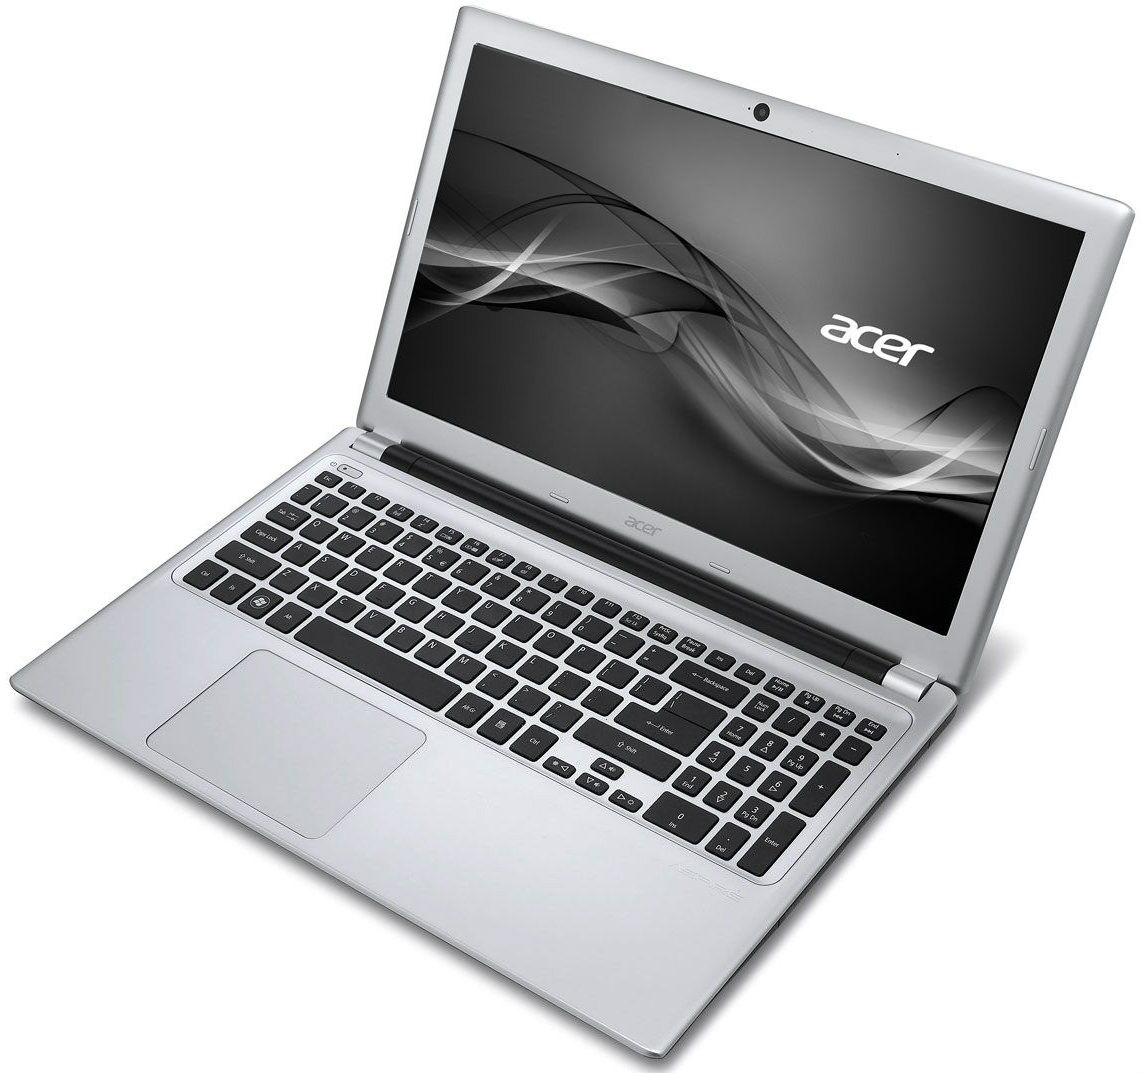 Acer Aspire V5-531 (NX.M1HSI.005) Laptop (Pentium Dual Core 2nd Gen/2 GB/500 GB/Linux/128 MB) Price